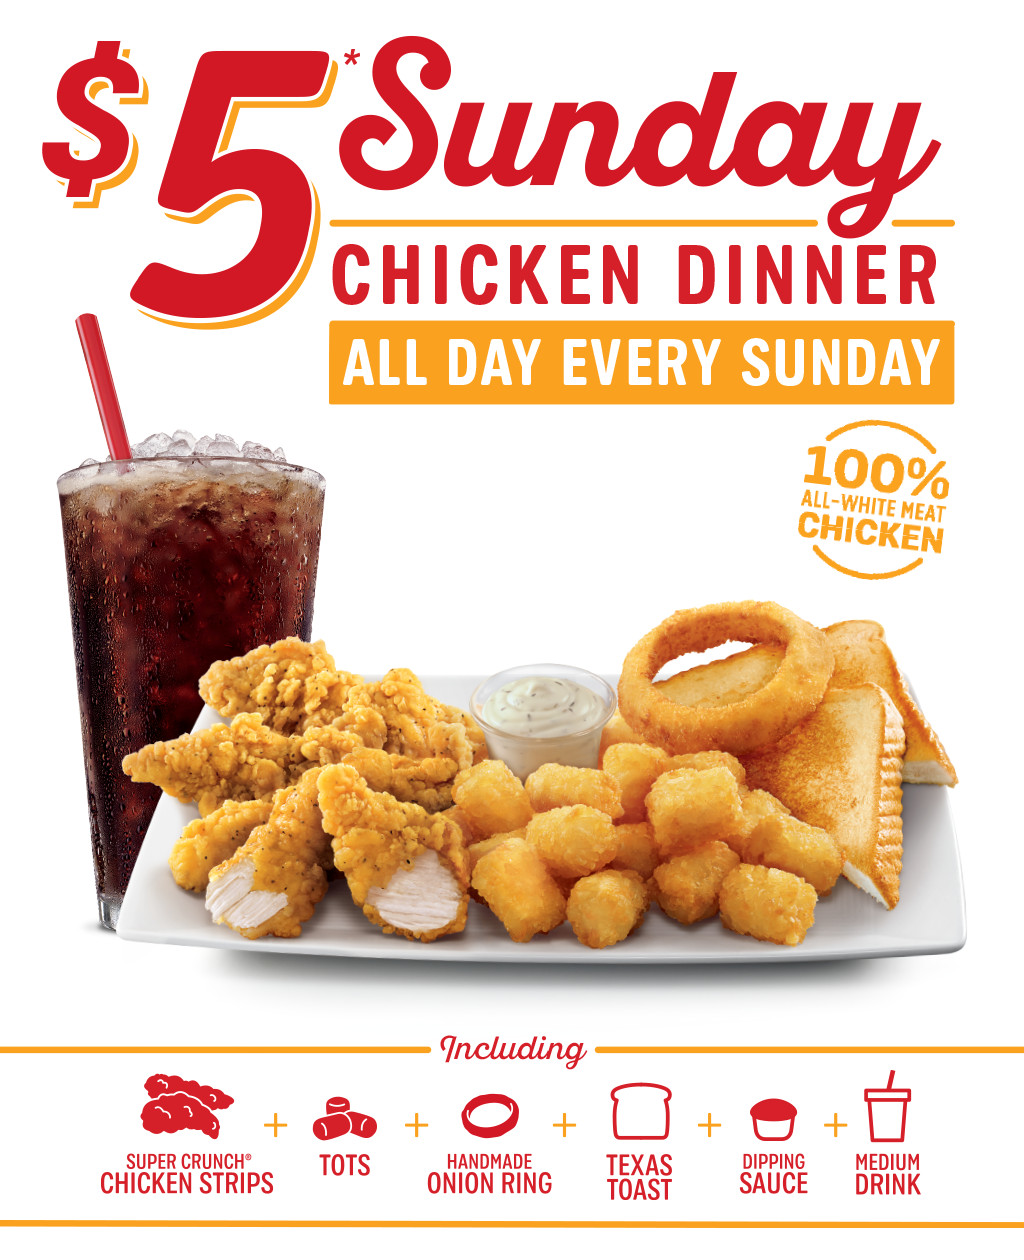 Sonic Chicken Strip Dinner
 $5 Sunday Chicken Dinner All Day Every Sunday